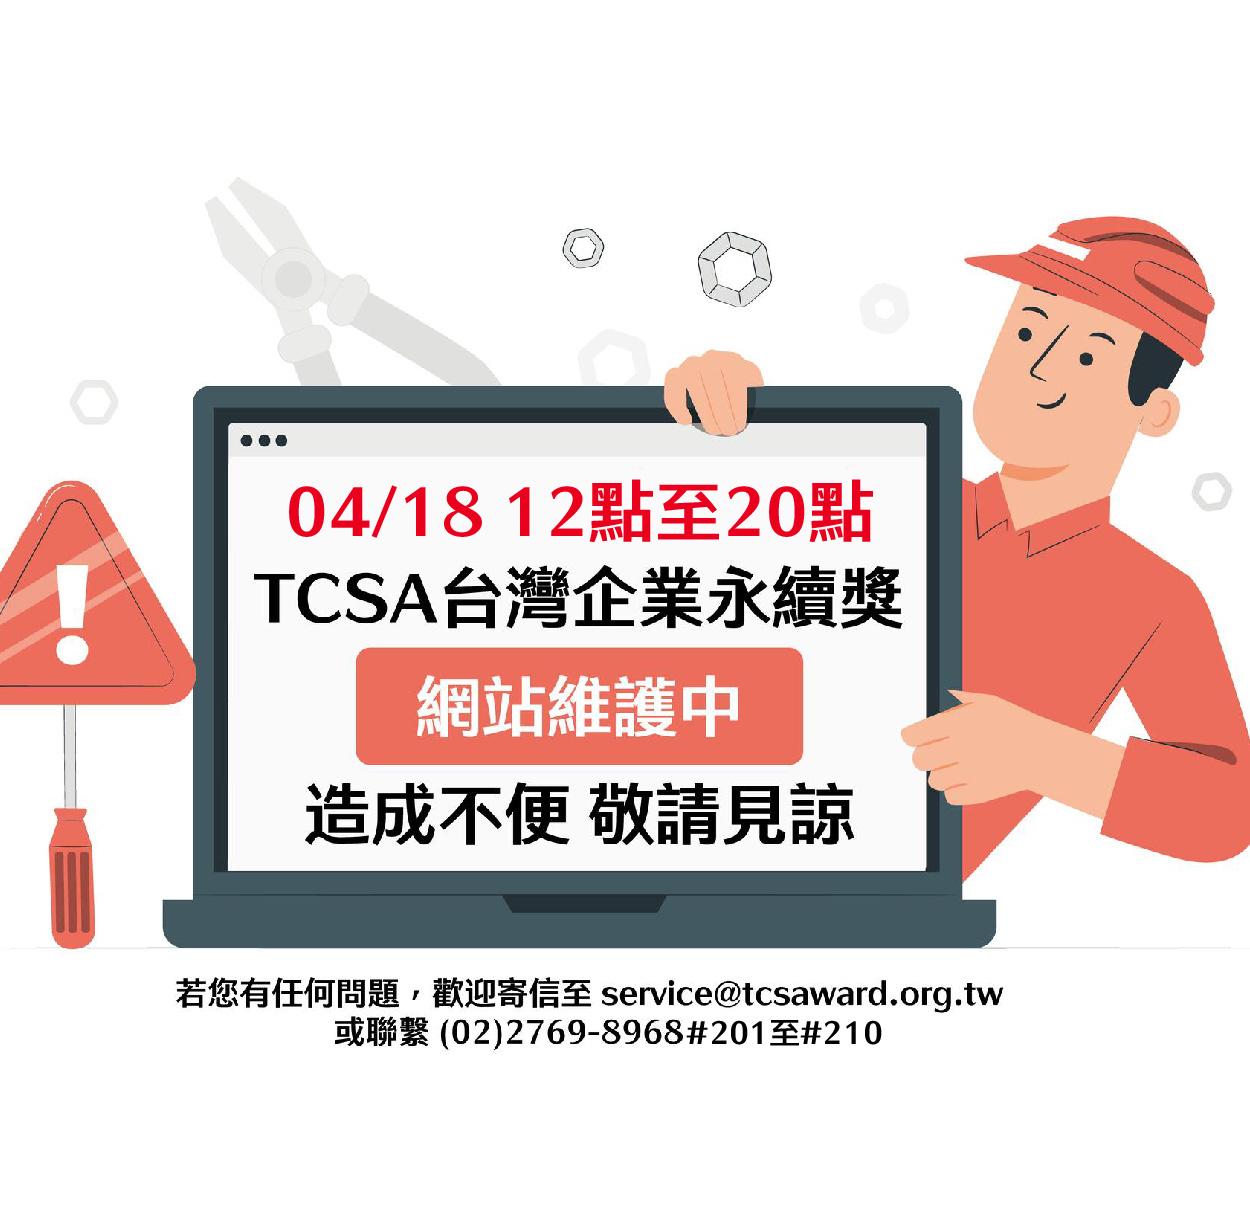 TCSA官網 網站維護 預告